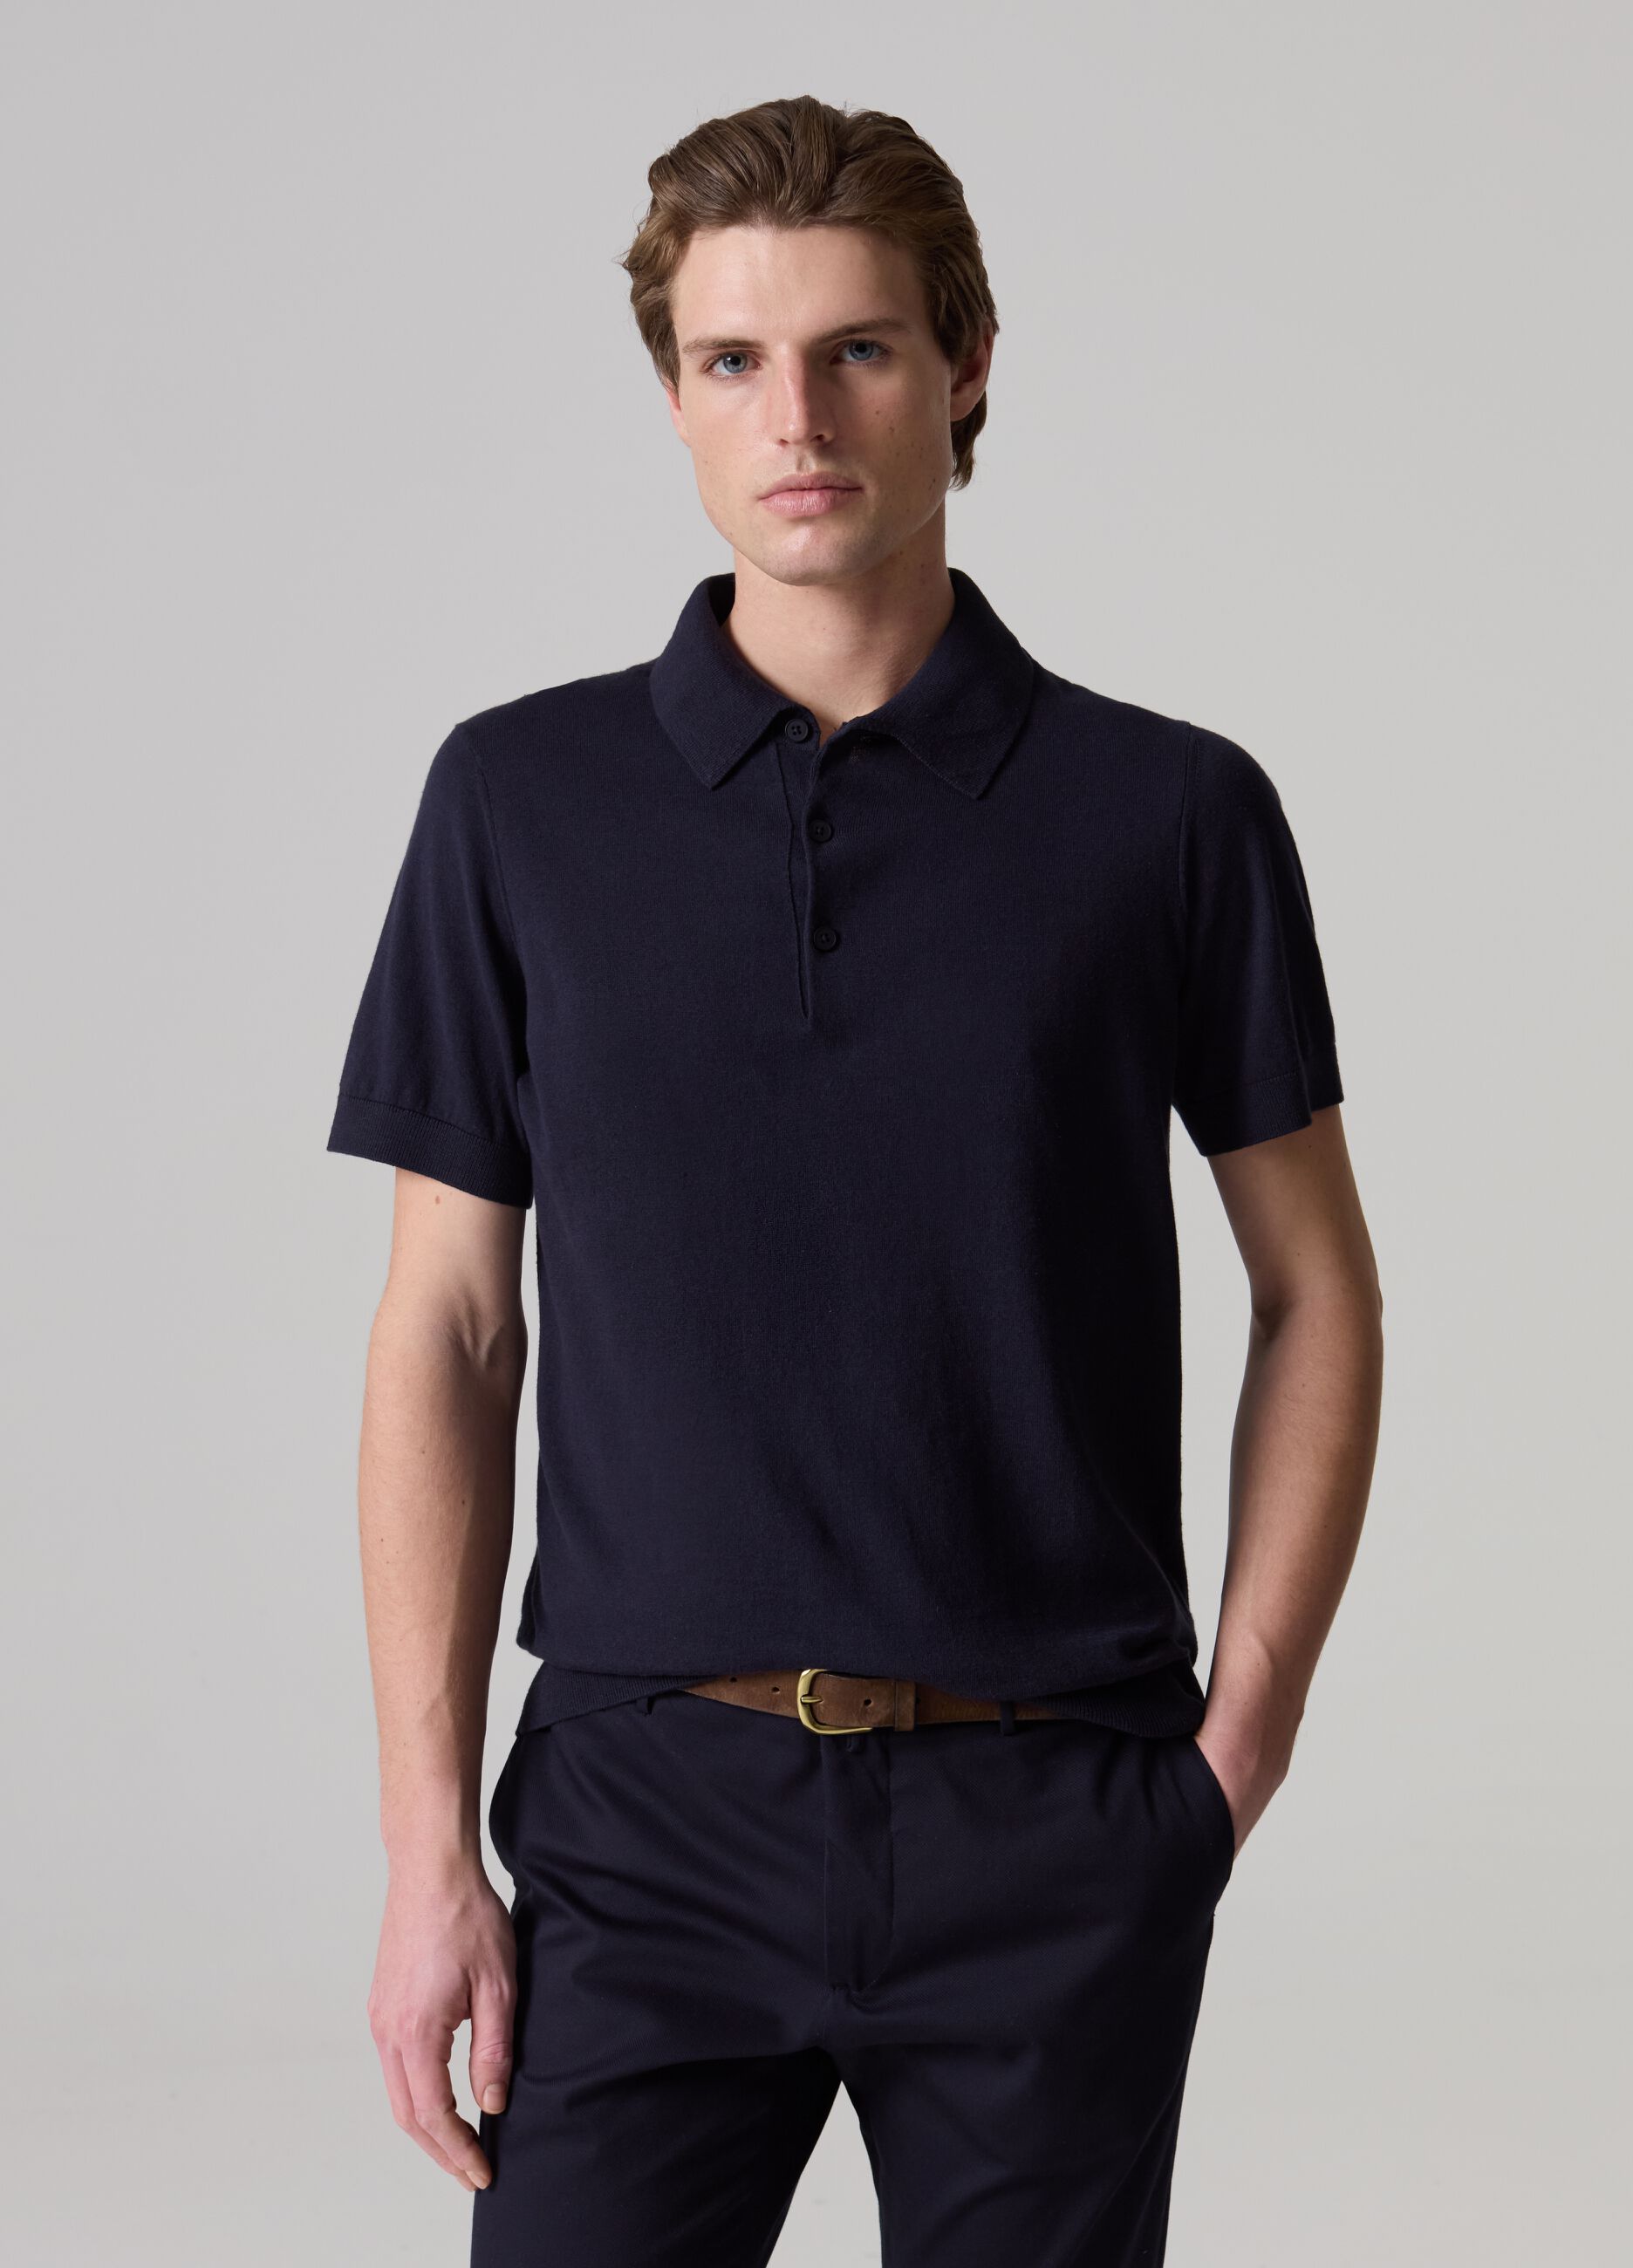 Contemporary solid colour polo shirt